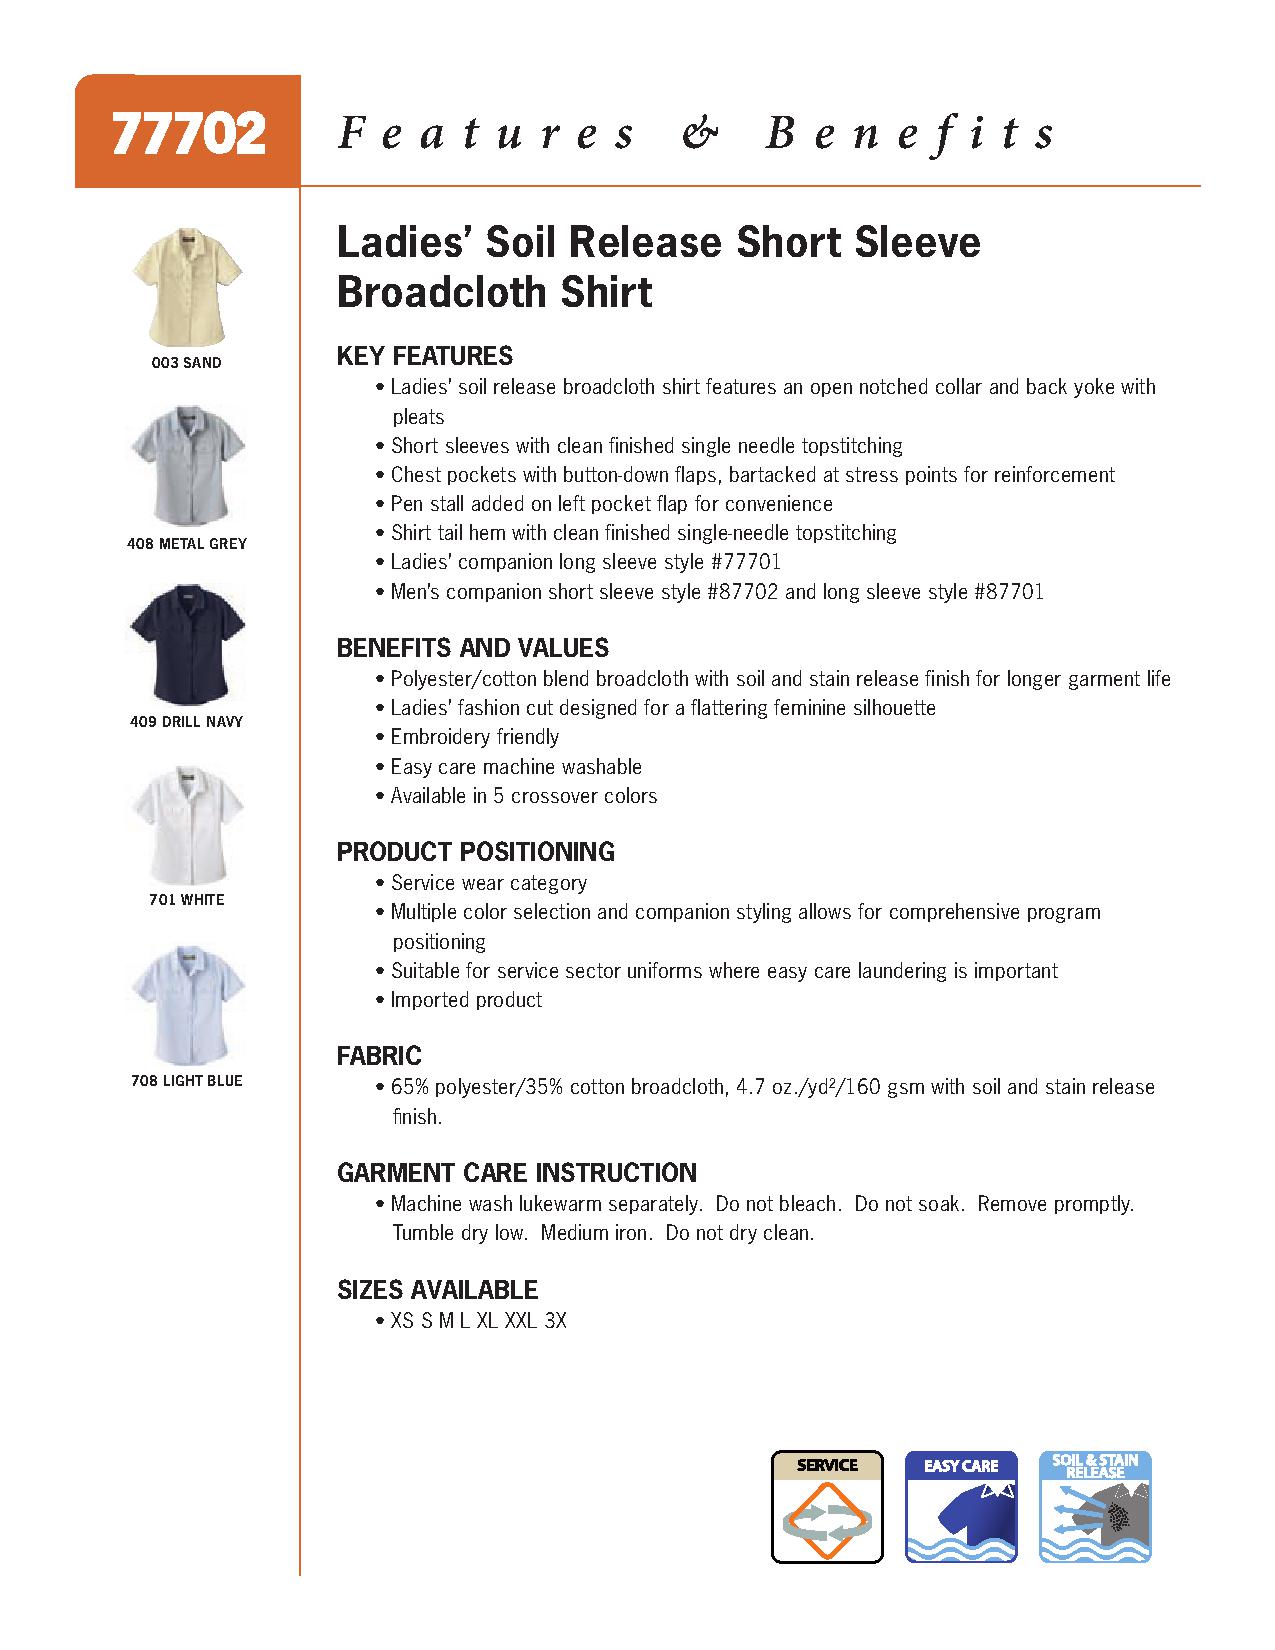 Ash City Uniform Shirts 77702 - Ladies' Soil Release Short Sleeve Broadcloth Shirt